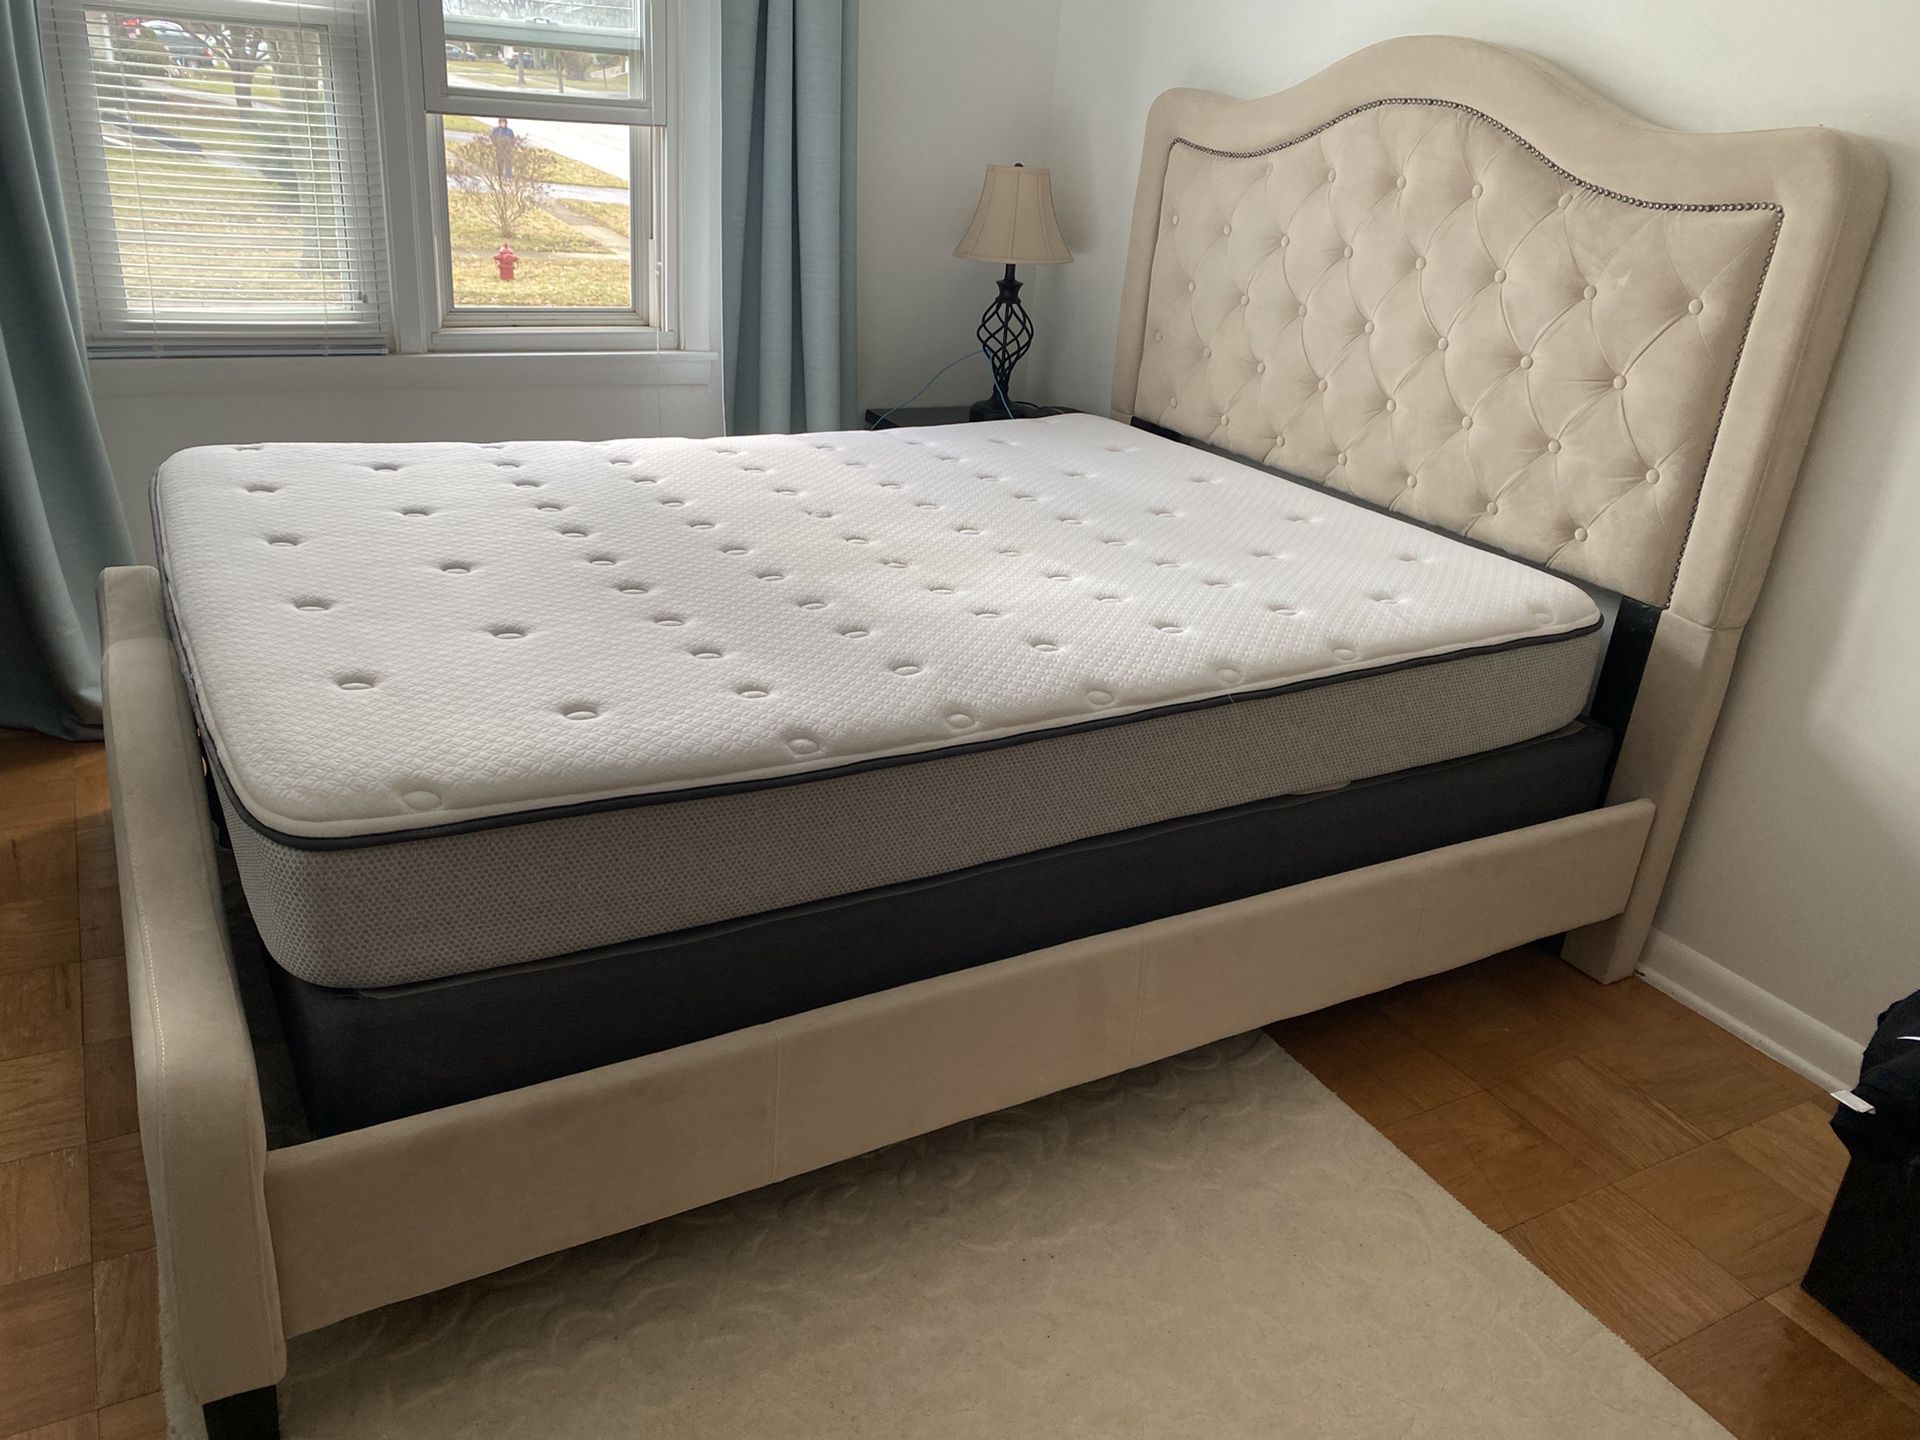 Queen size bed + mattress + box spring